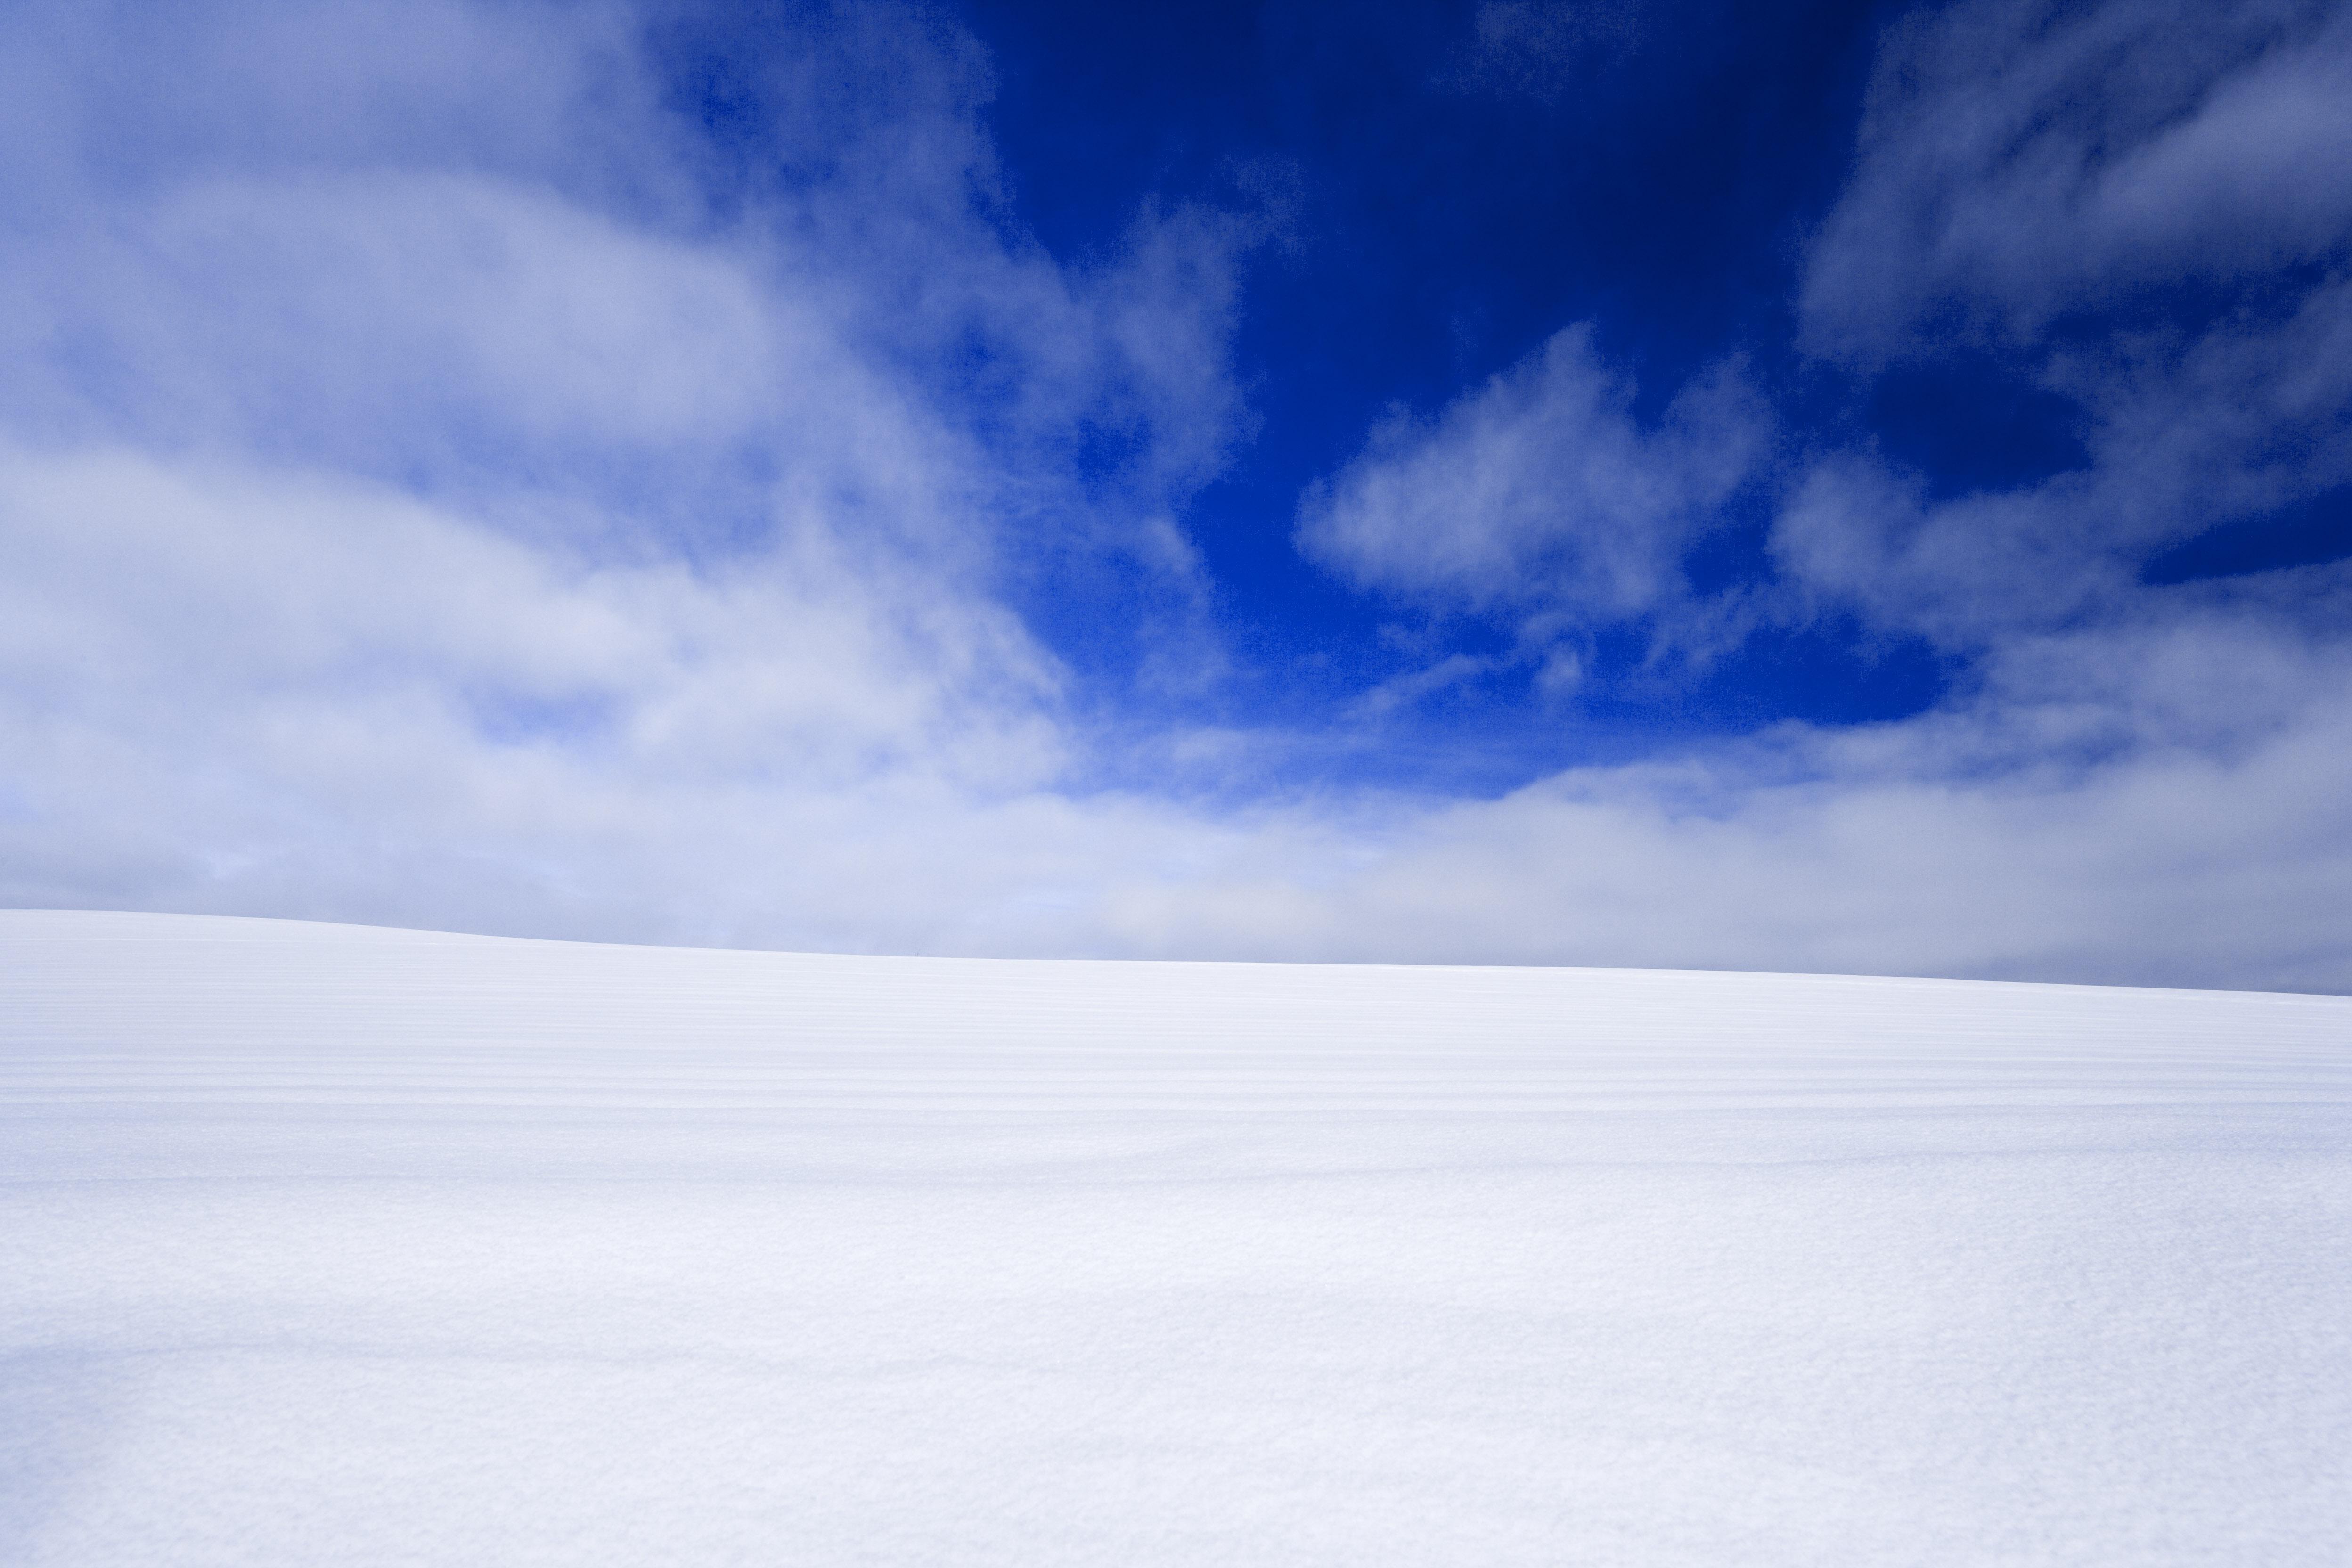 Небо Синее Голубое - Бесплатное фото на Pixabay - Pixabay